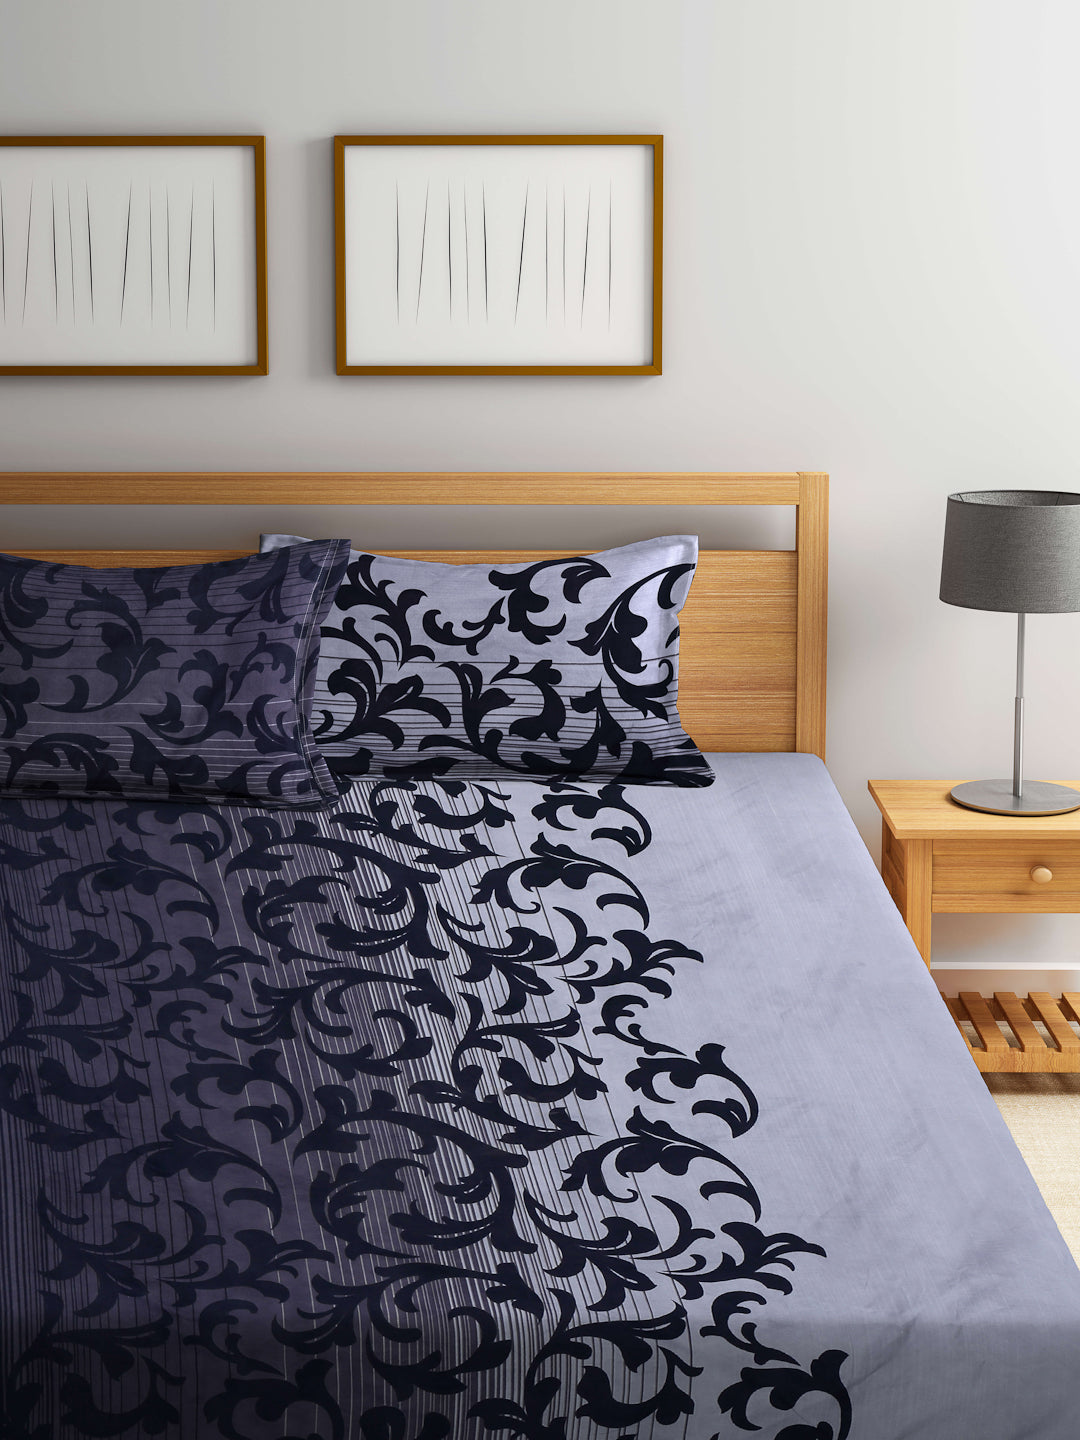 Arrabi Black Floral TC Cotton Blend King Size Bookfold Bedsheet with 2 Pillow Covers (250 X 215 cm)